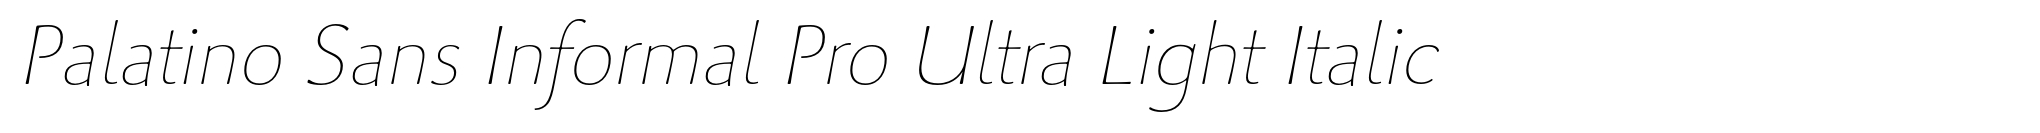 Palatino Sans Informal Pro Ultra Light Italic image